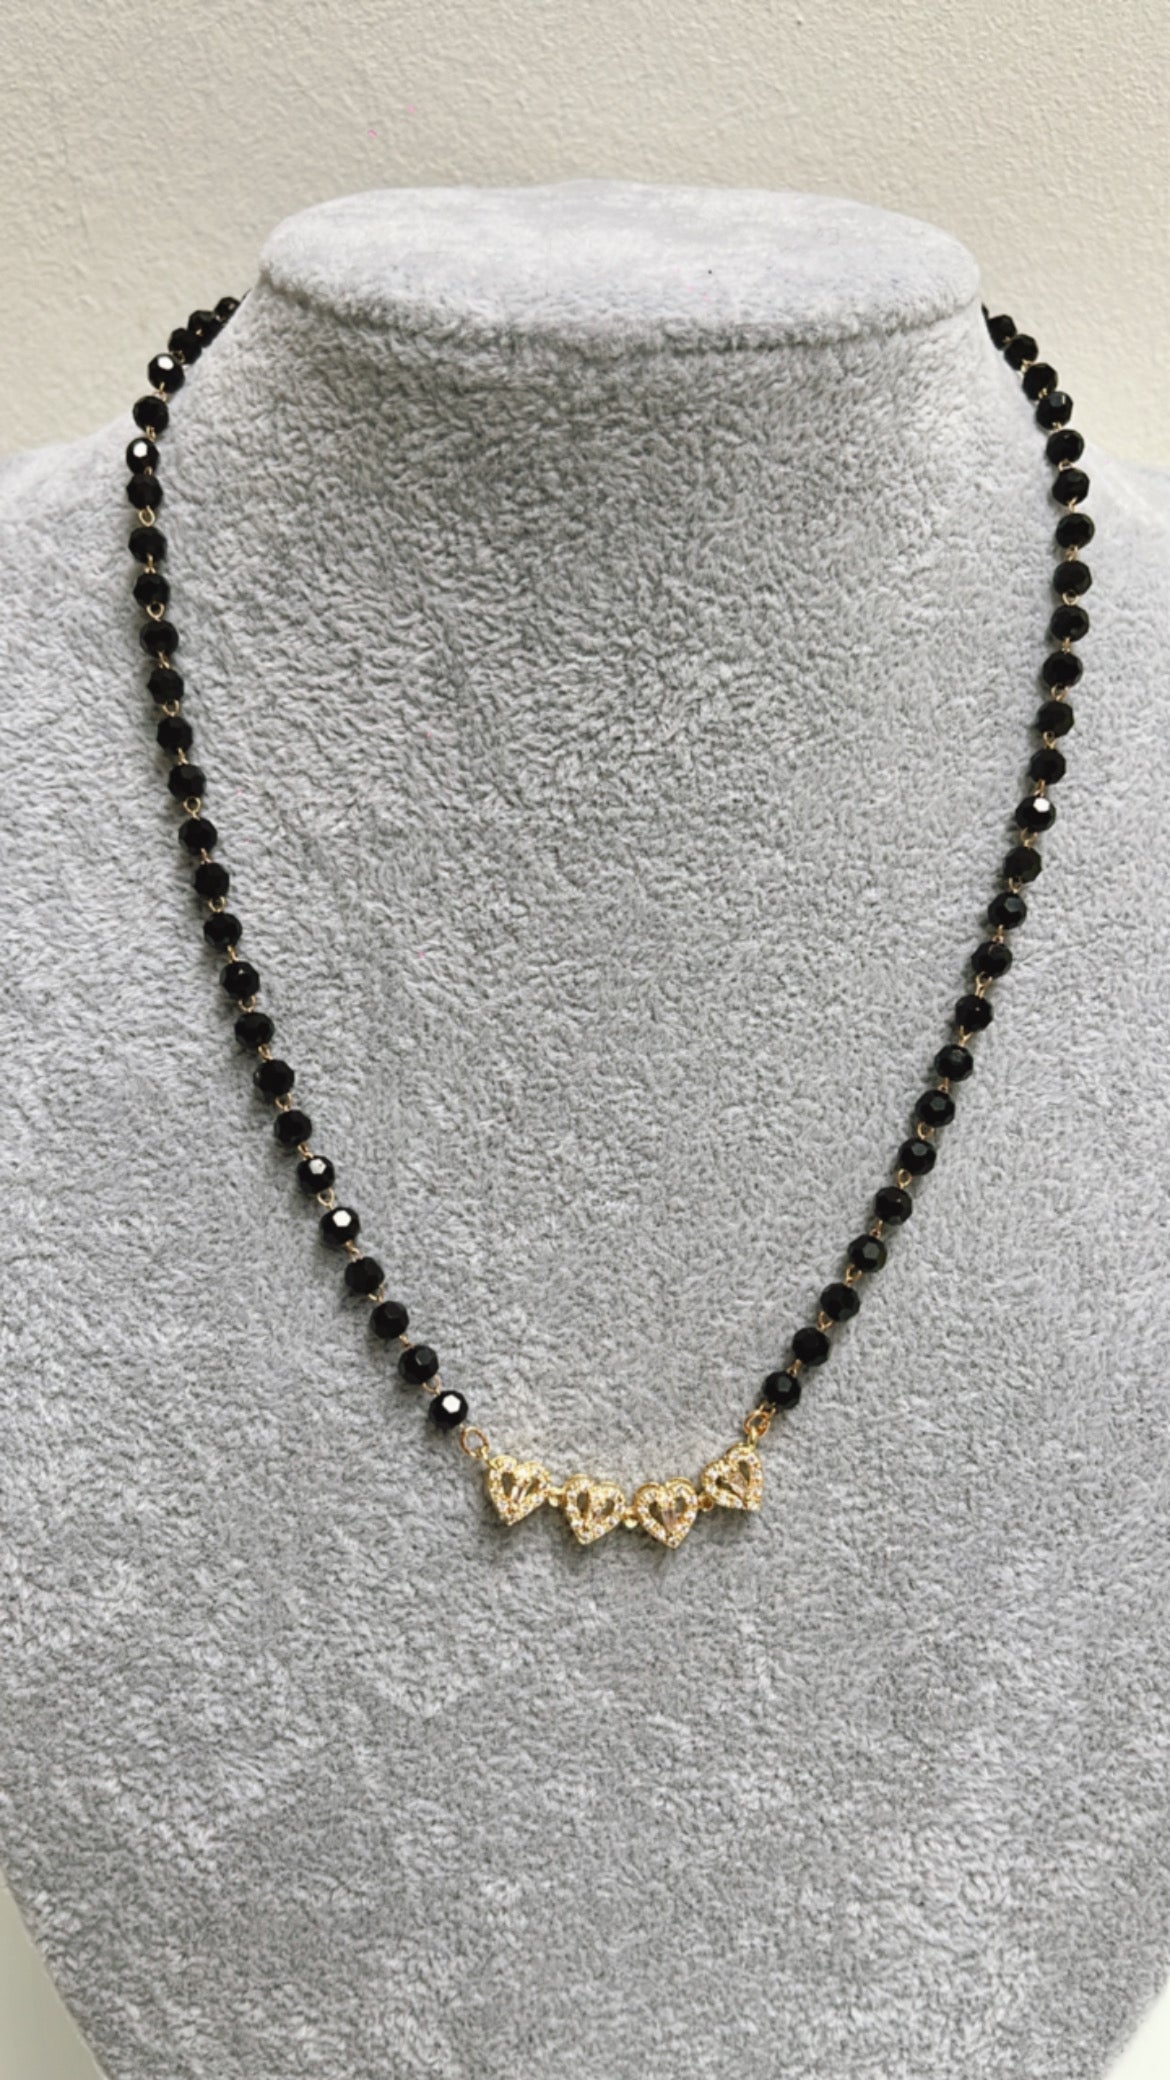 Roshni - Stunning Mangalsutra Fusion Black Crystal & Swarovski Clover Necklace - 18k gold vermeil